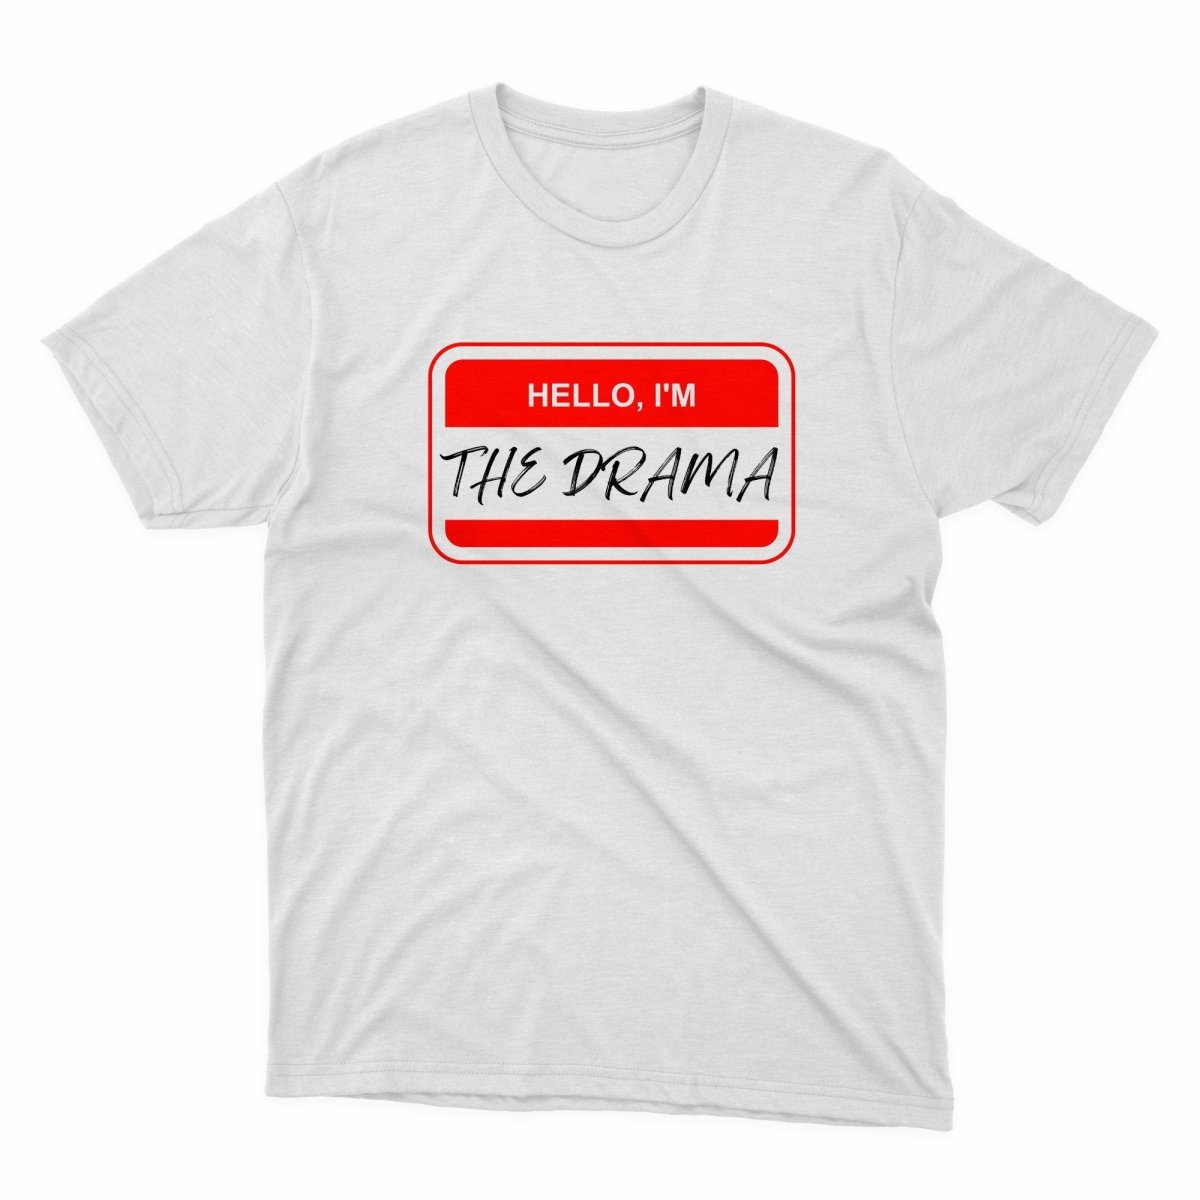 Hello I'm The Drama Shirt - stickerbullHello I'm The Drama ShirtShirtsPrintifystickerbull18880318192627063827WhiteSa white t - shirt with the words hello i'm the drama on it